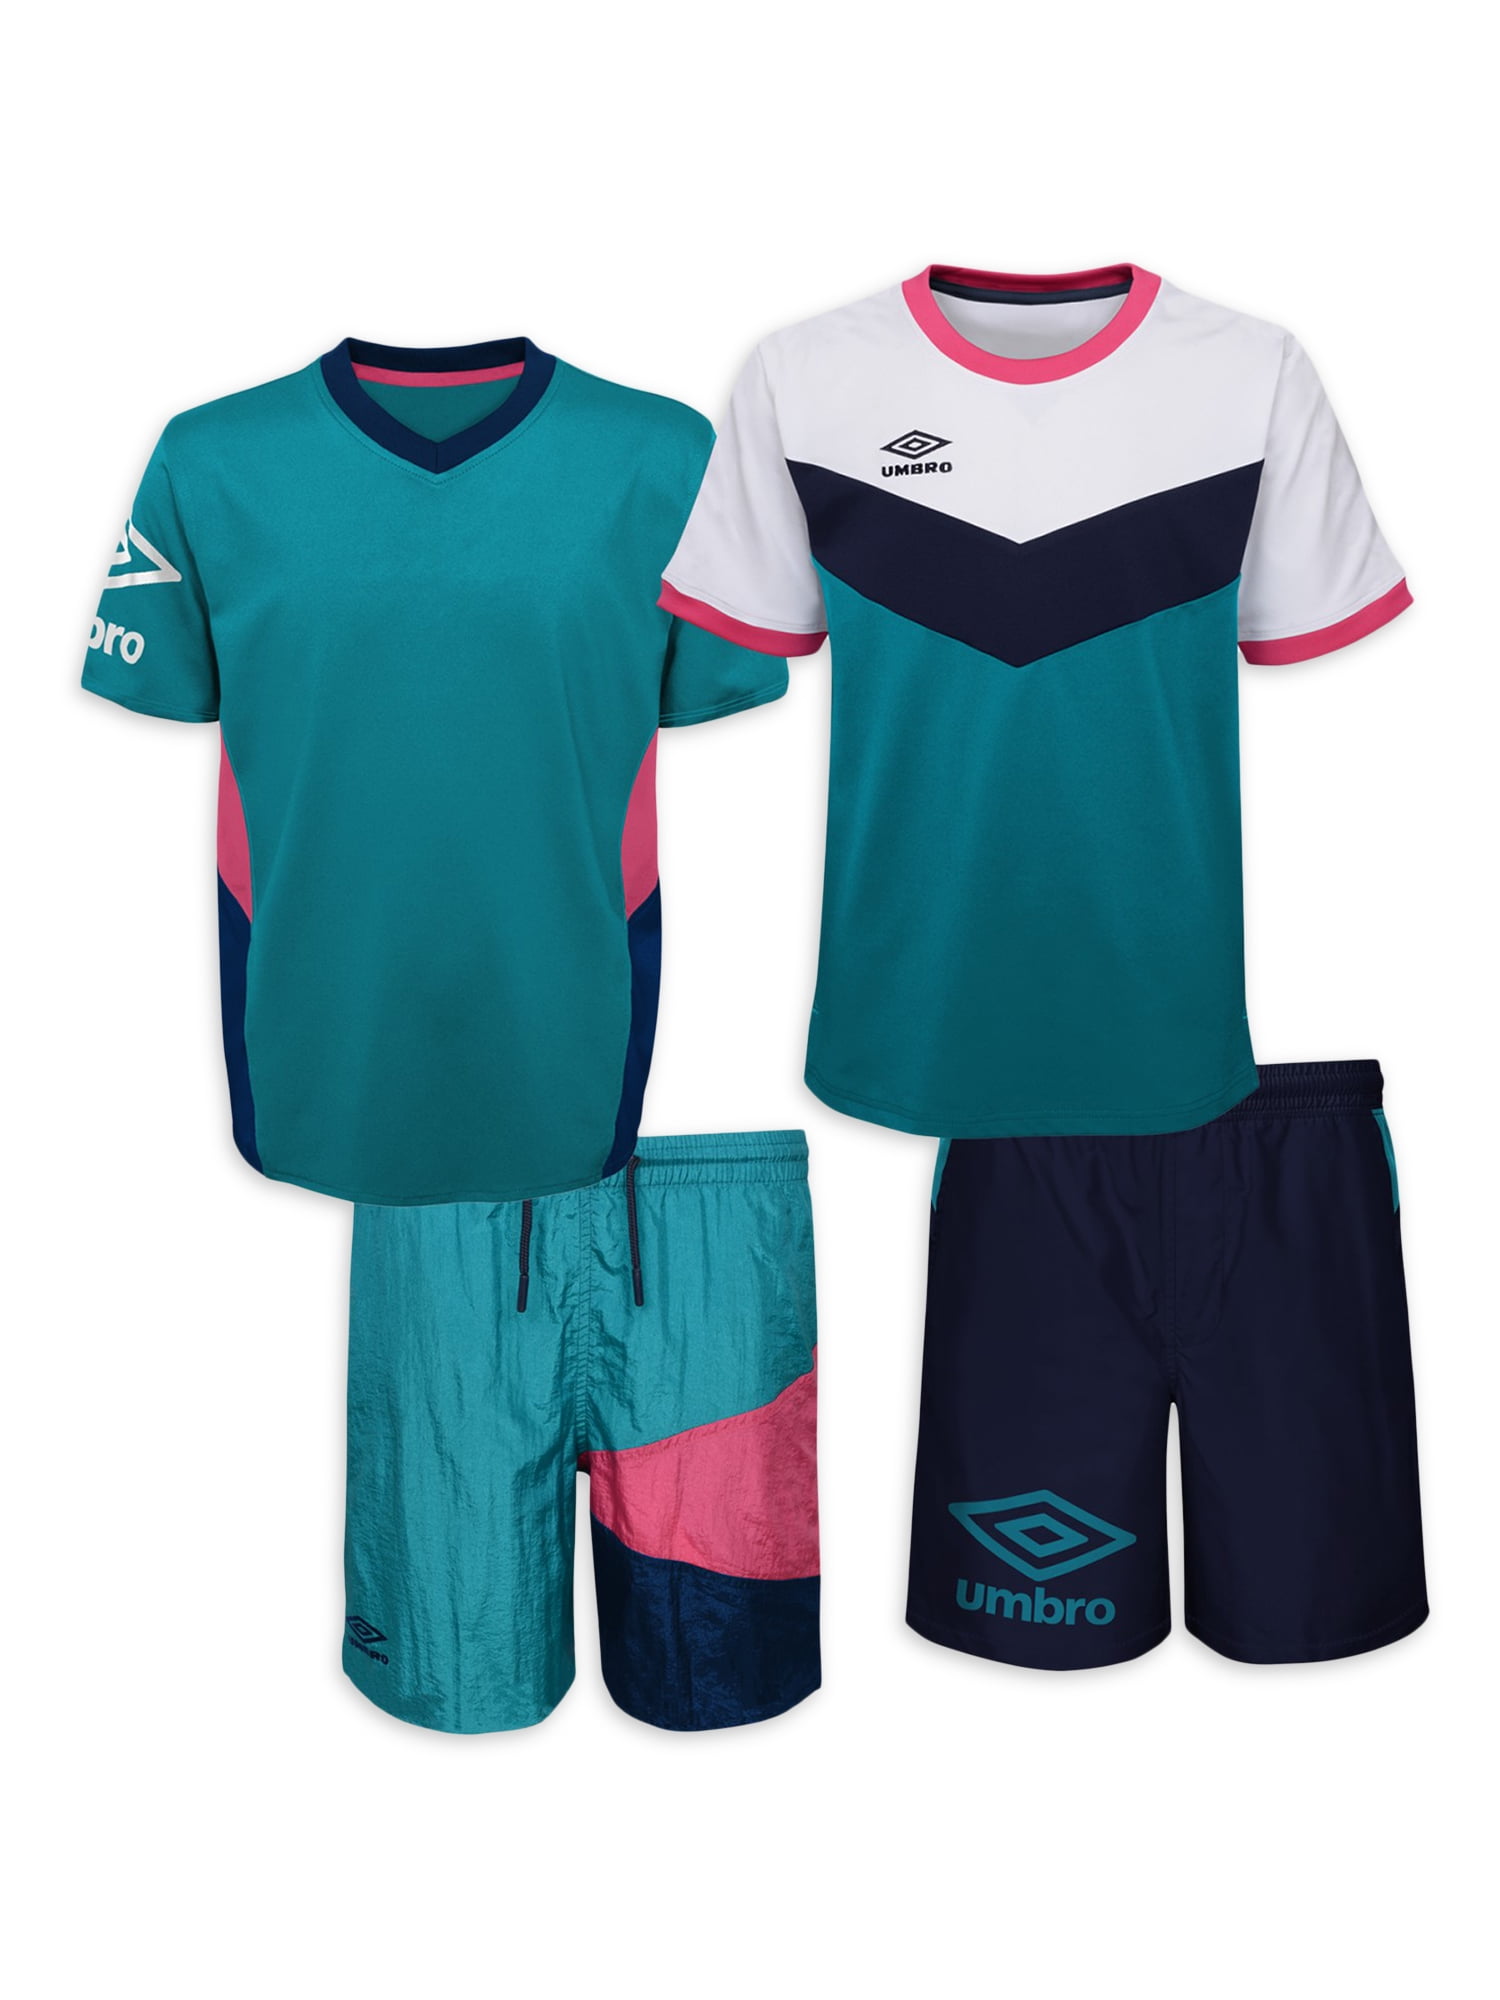 ZETIY Toddler Little Boys' Active Mesh Soccer Jersey and Shorts Sets